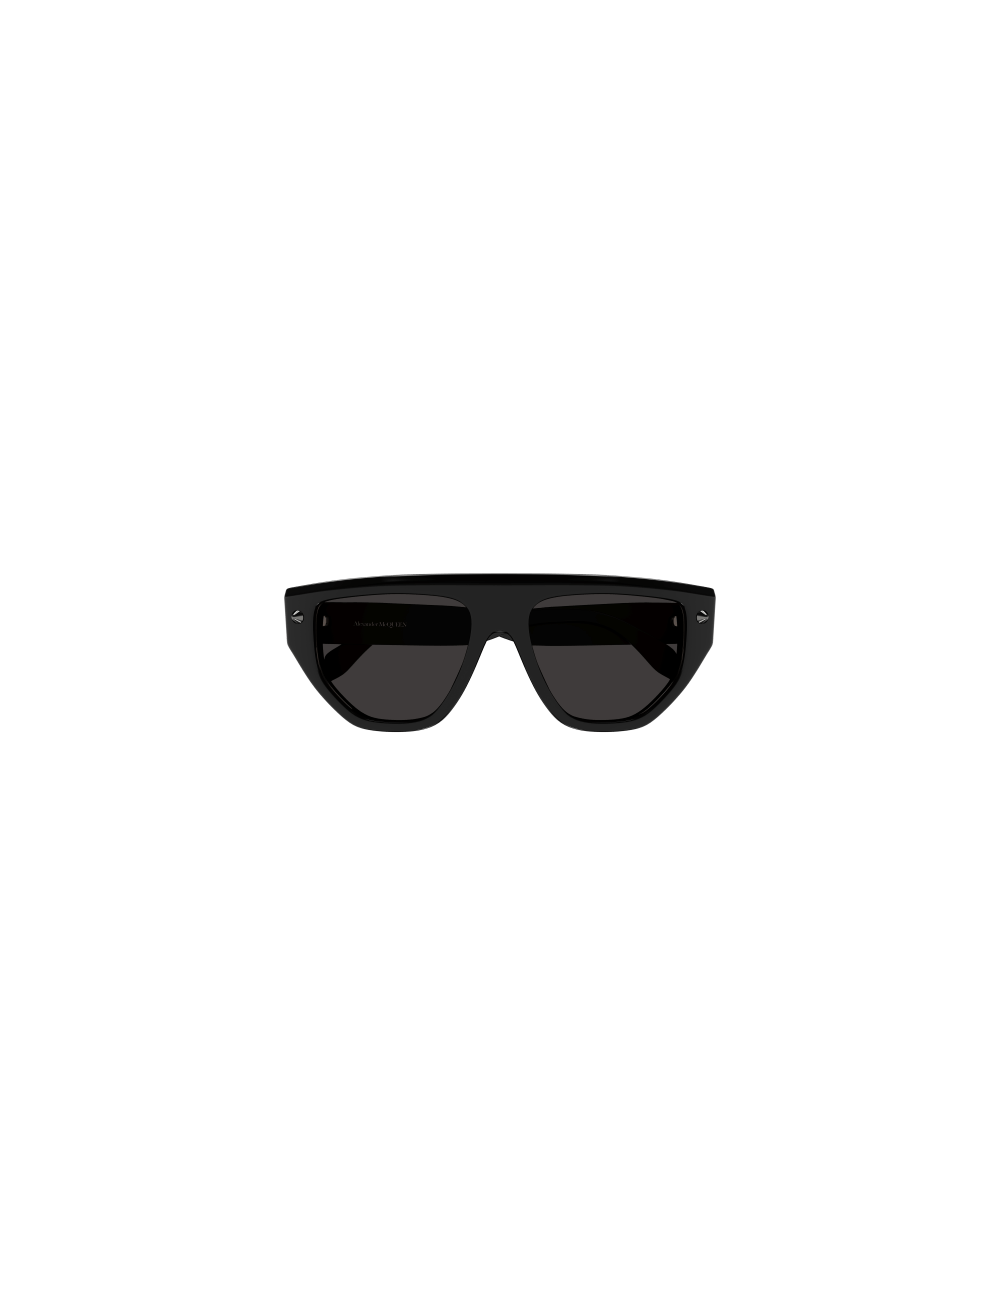 Alexander McQueen AM0408S 001 sunglasses for men – Ottica Mauro